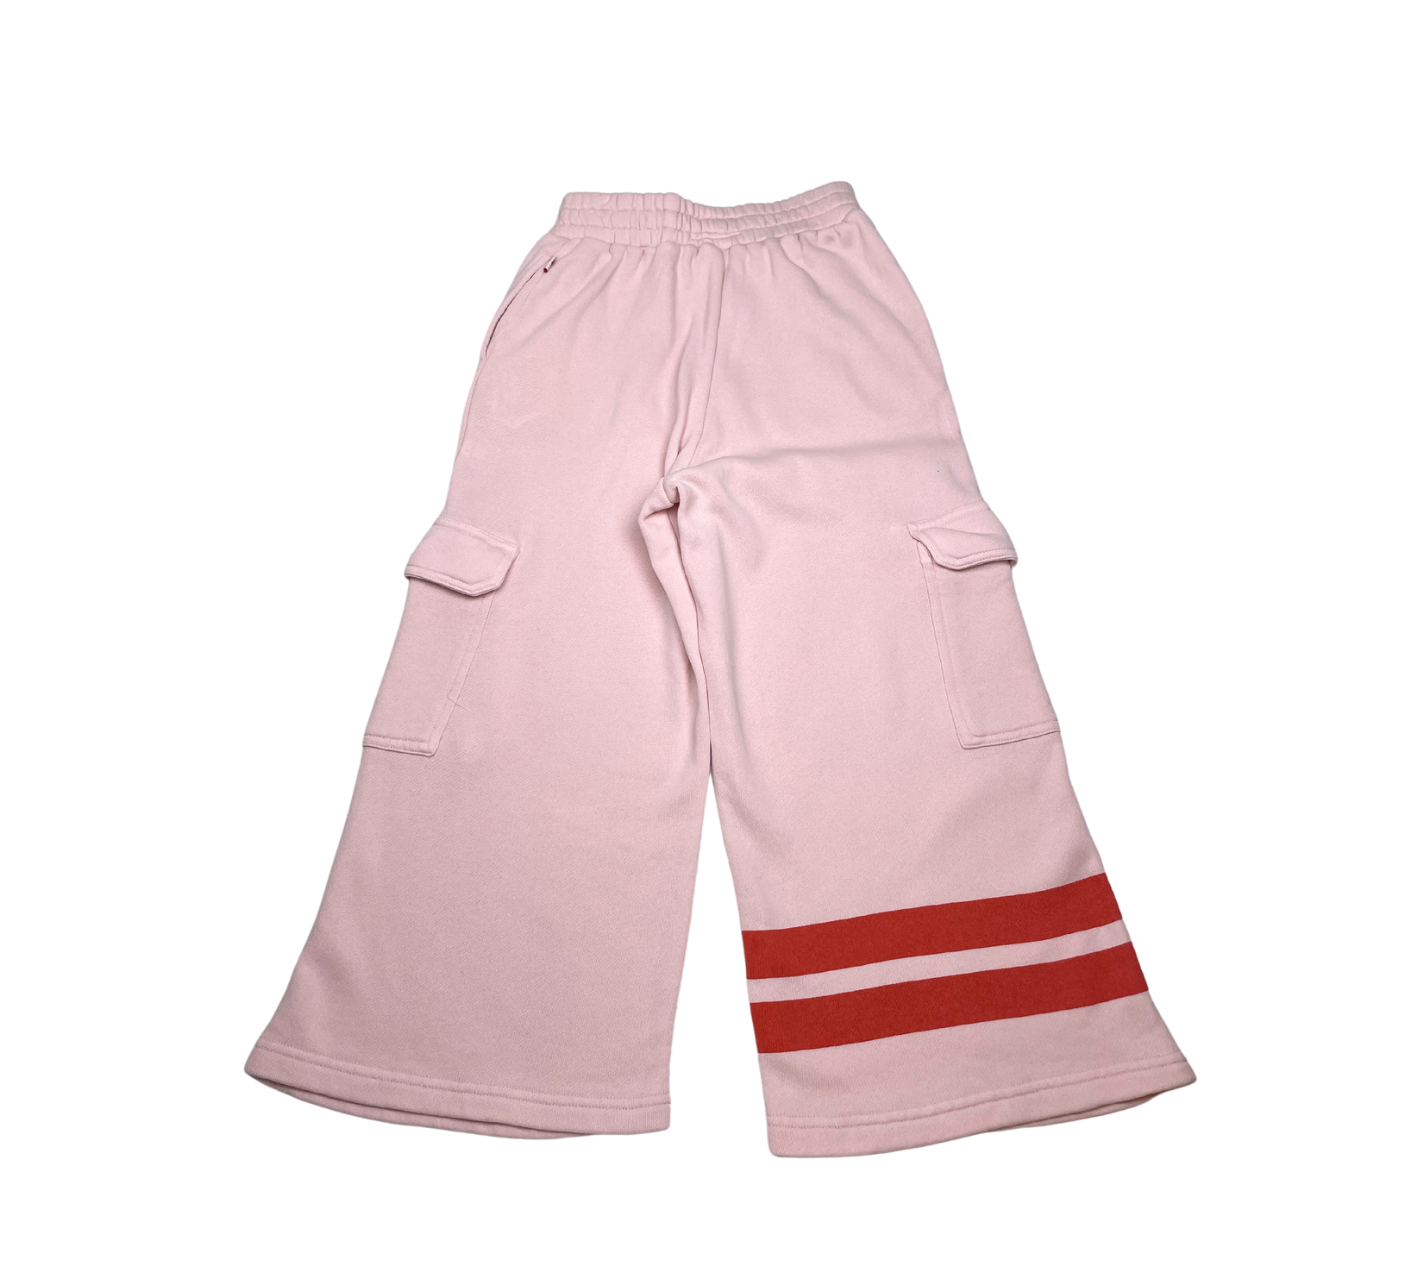 AO76 - Pantalon ample rose - 8 ans